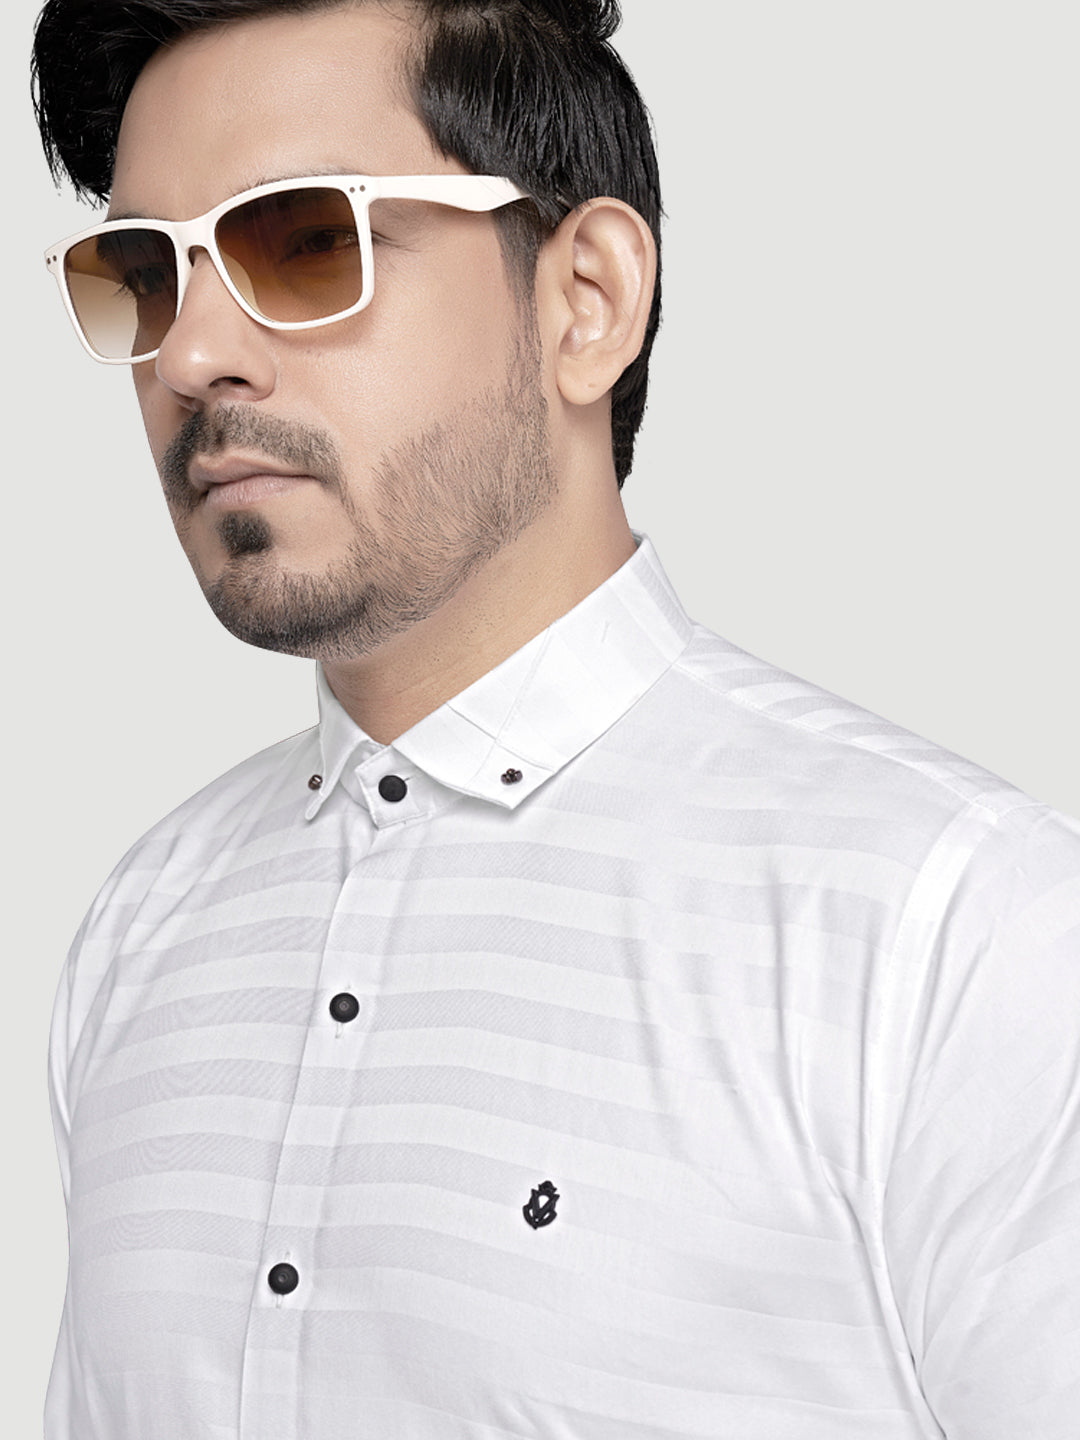 Men's Designer Weft Shirt with Collar Accessory